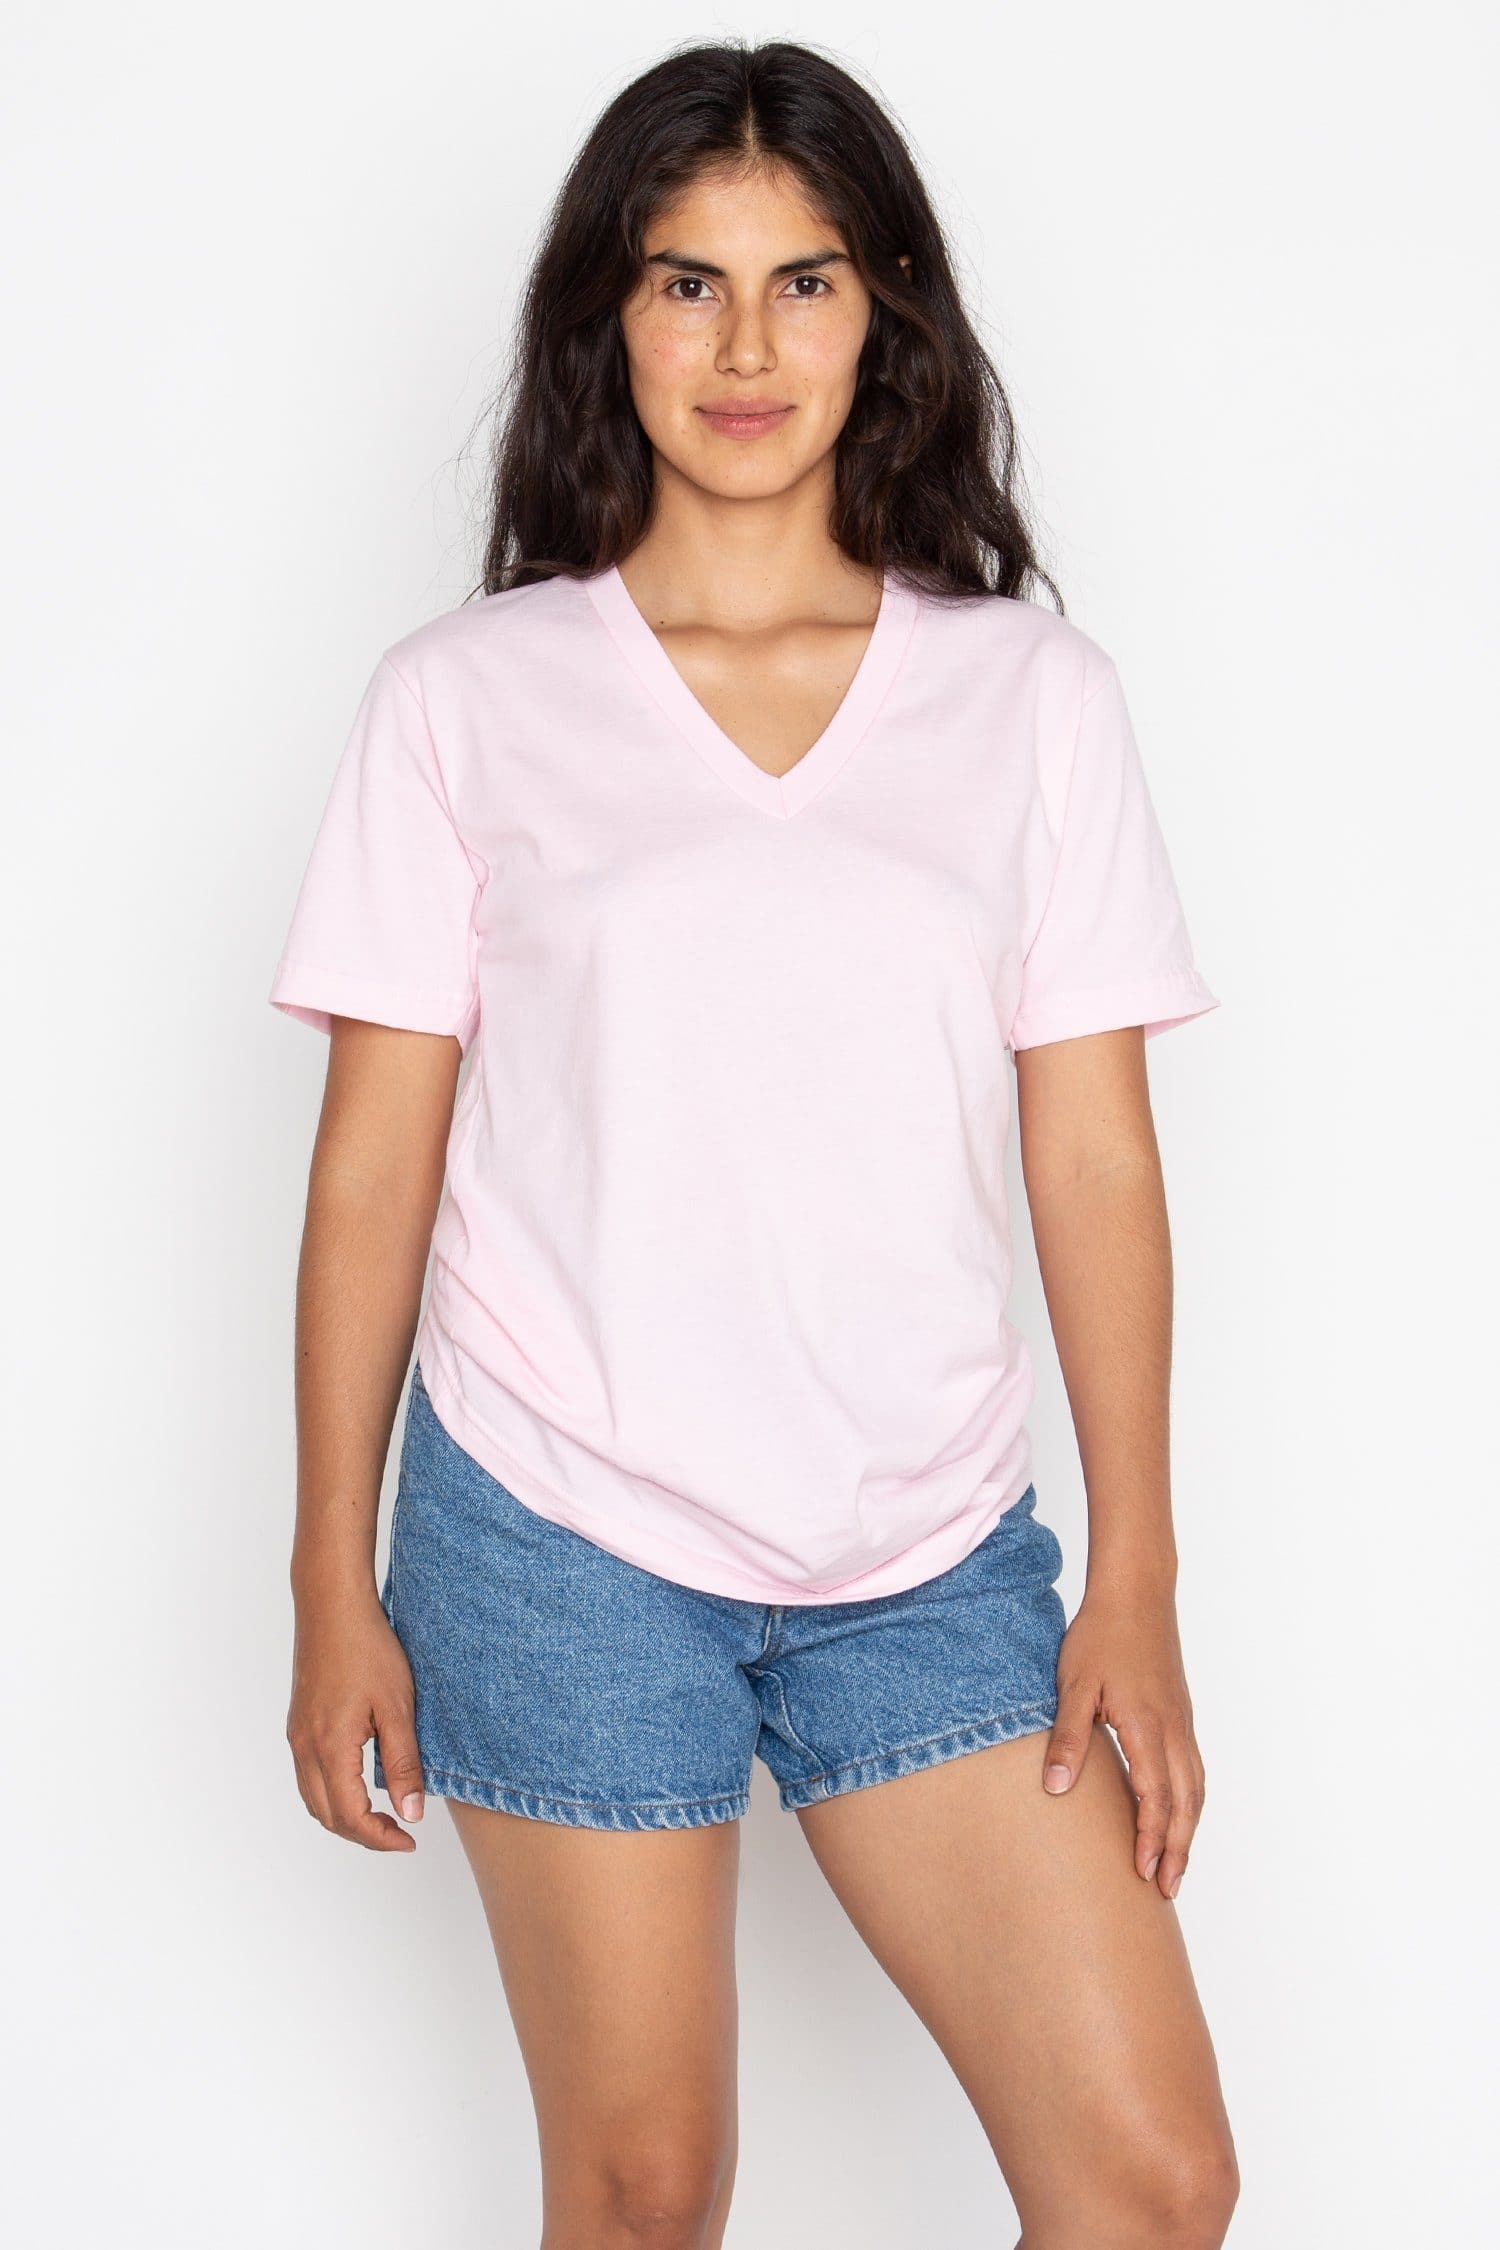 New Era Apparel Girl's Chicago Cubs Pink Dip Dye V-Neck T-Shirt